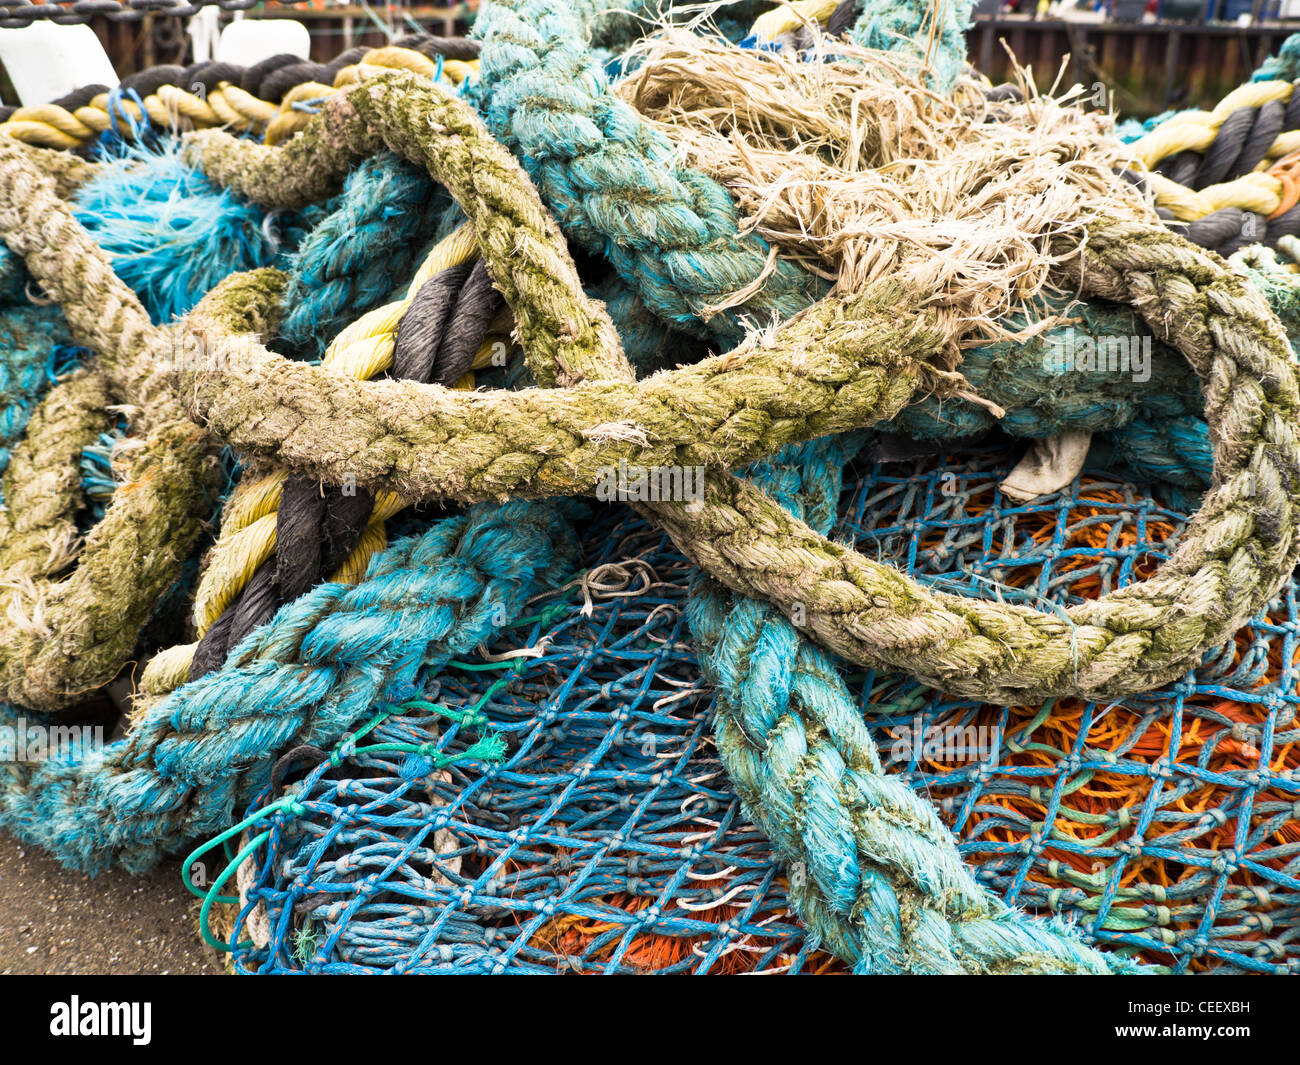 https://c8.alamy.com/comp/CEEXBH/frayed-rope-and-fishing-nets-in-whitstable-harbour-CEEXBH.jpg